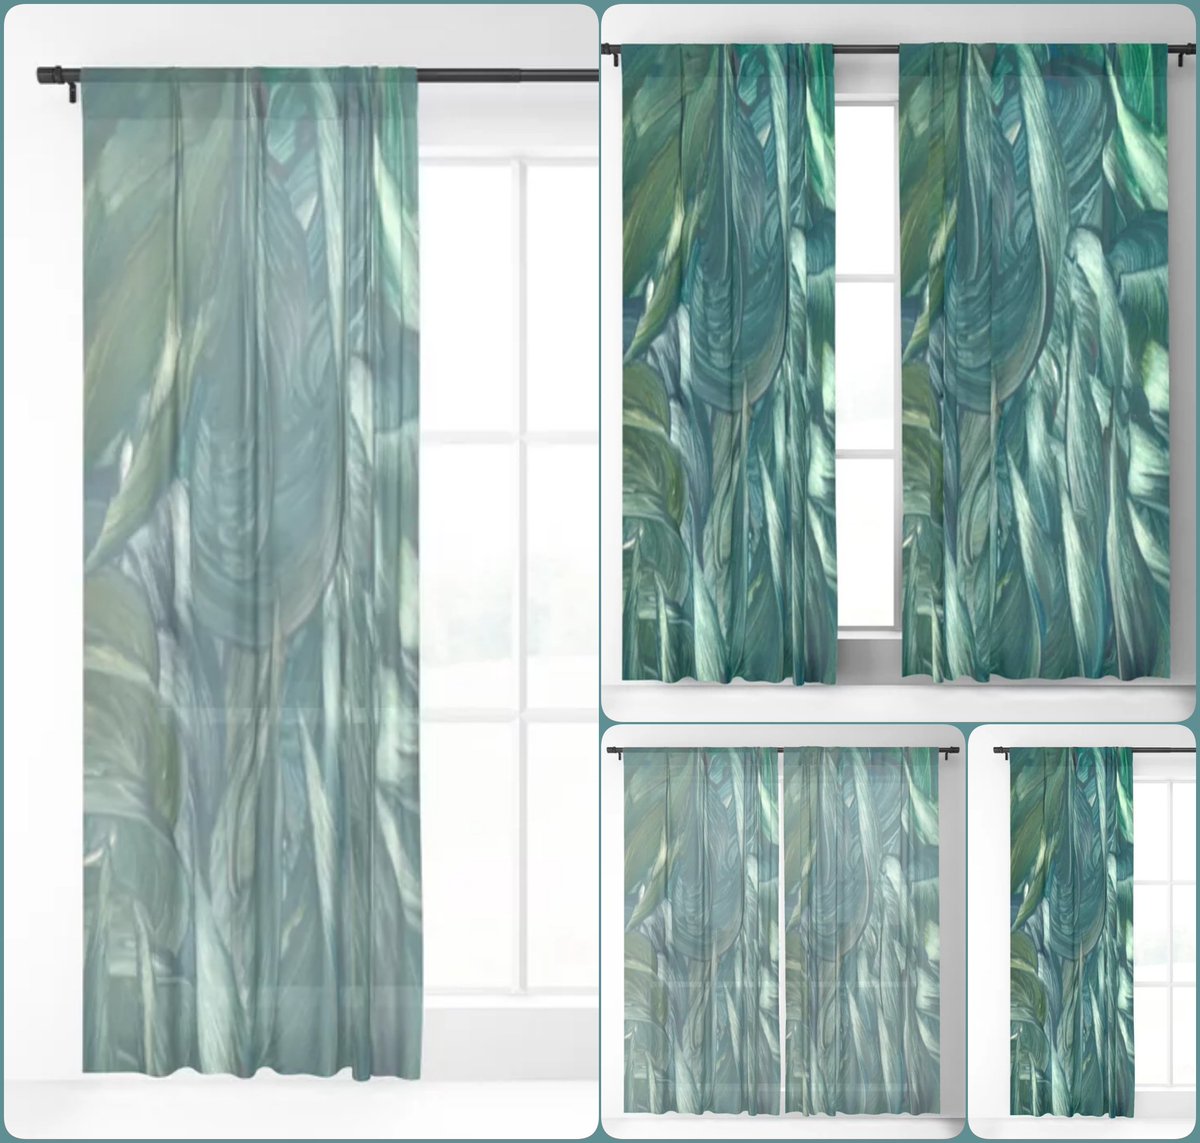 Houris Sheer & Blackout Curtain~by Art Falaxy~
~Exquisite Decor~
#artfalaxy #art #curtains #drapes #homedecor #society6 #Society6max #swirls #accents #sheercurtains #blackoutcurtains #floorrugs

society6.com/product/houris…
society6.com/product/houris…